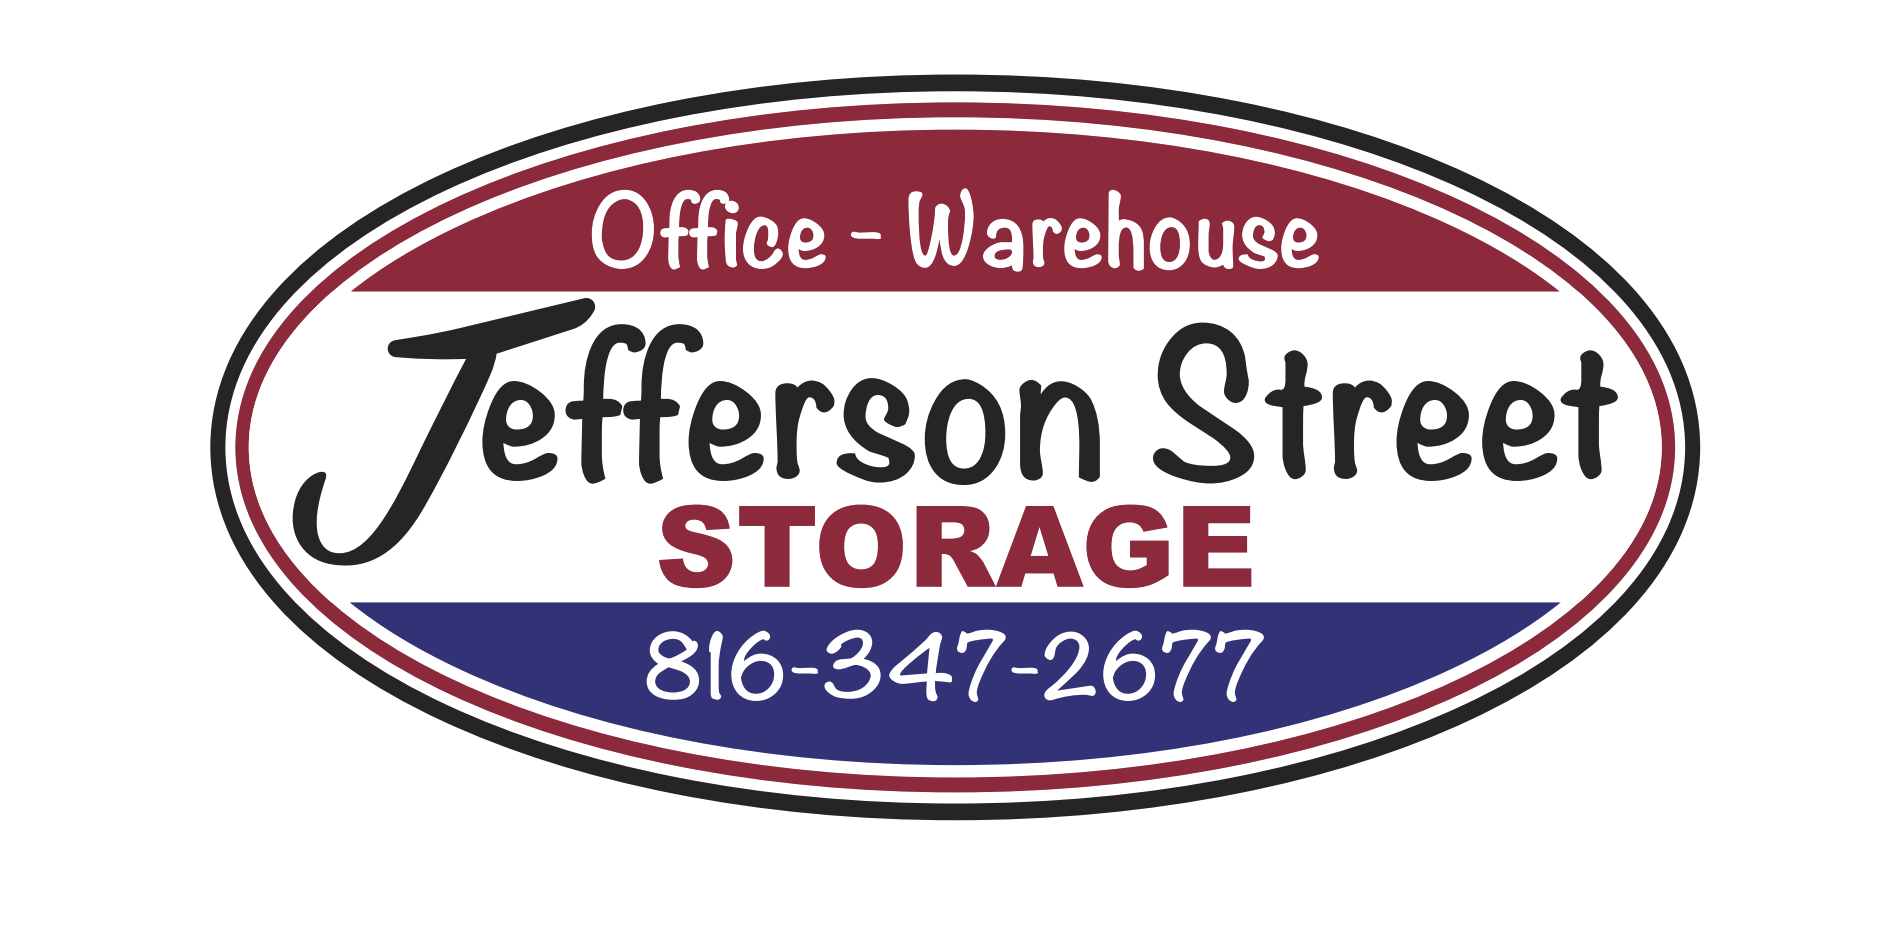 Jefferson Street Storage